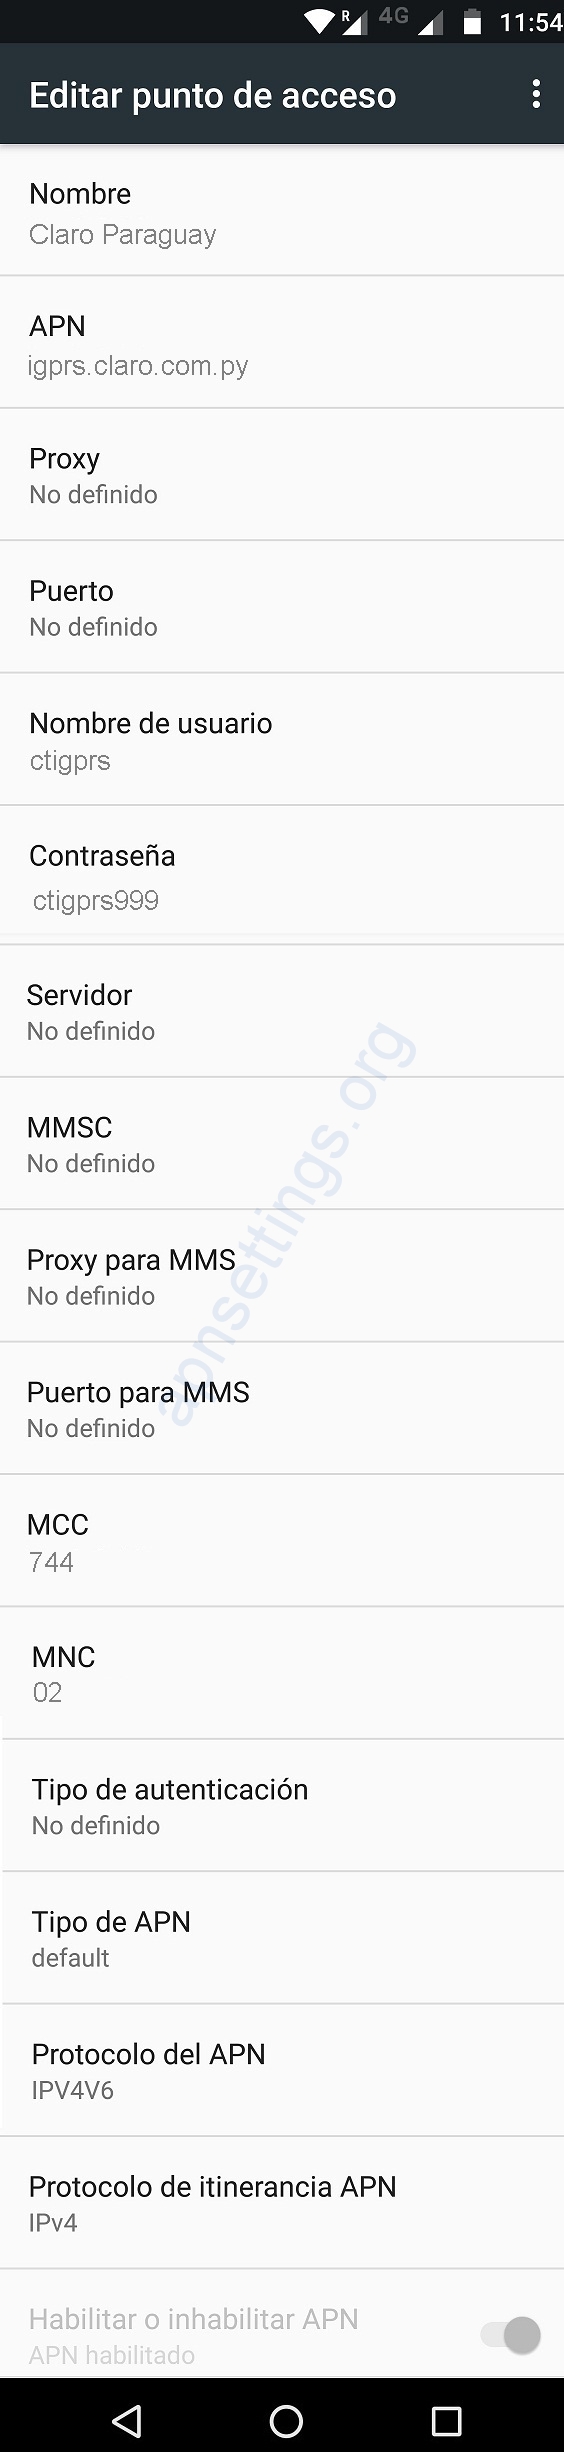 APN de Claro Paraguay 4G para Android